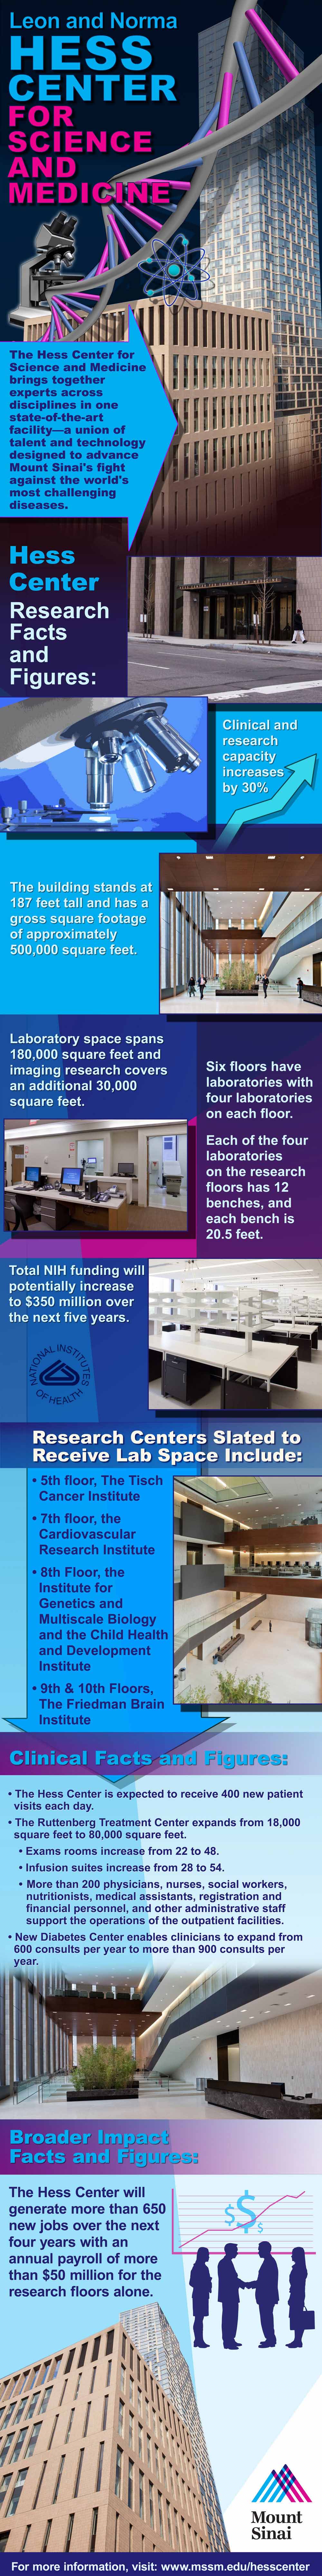 Hess Center infographic